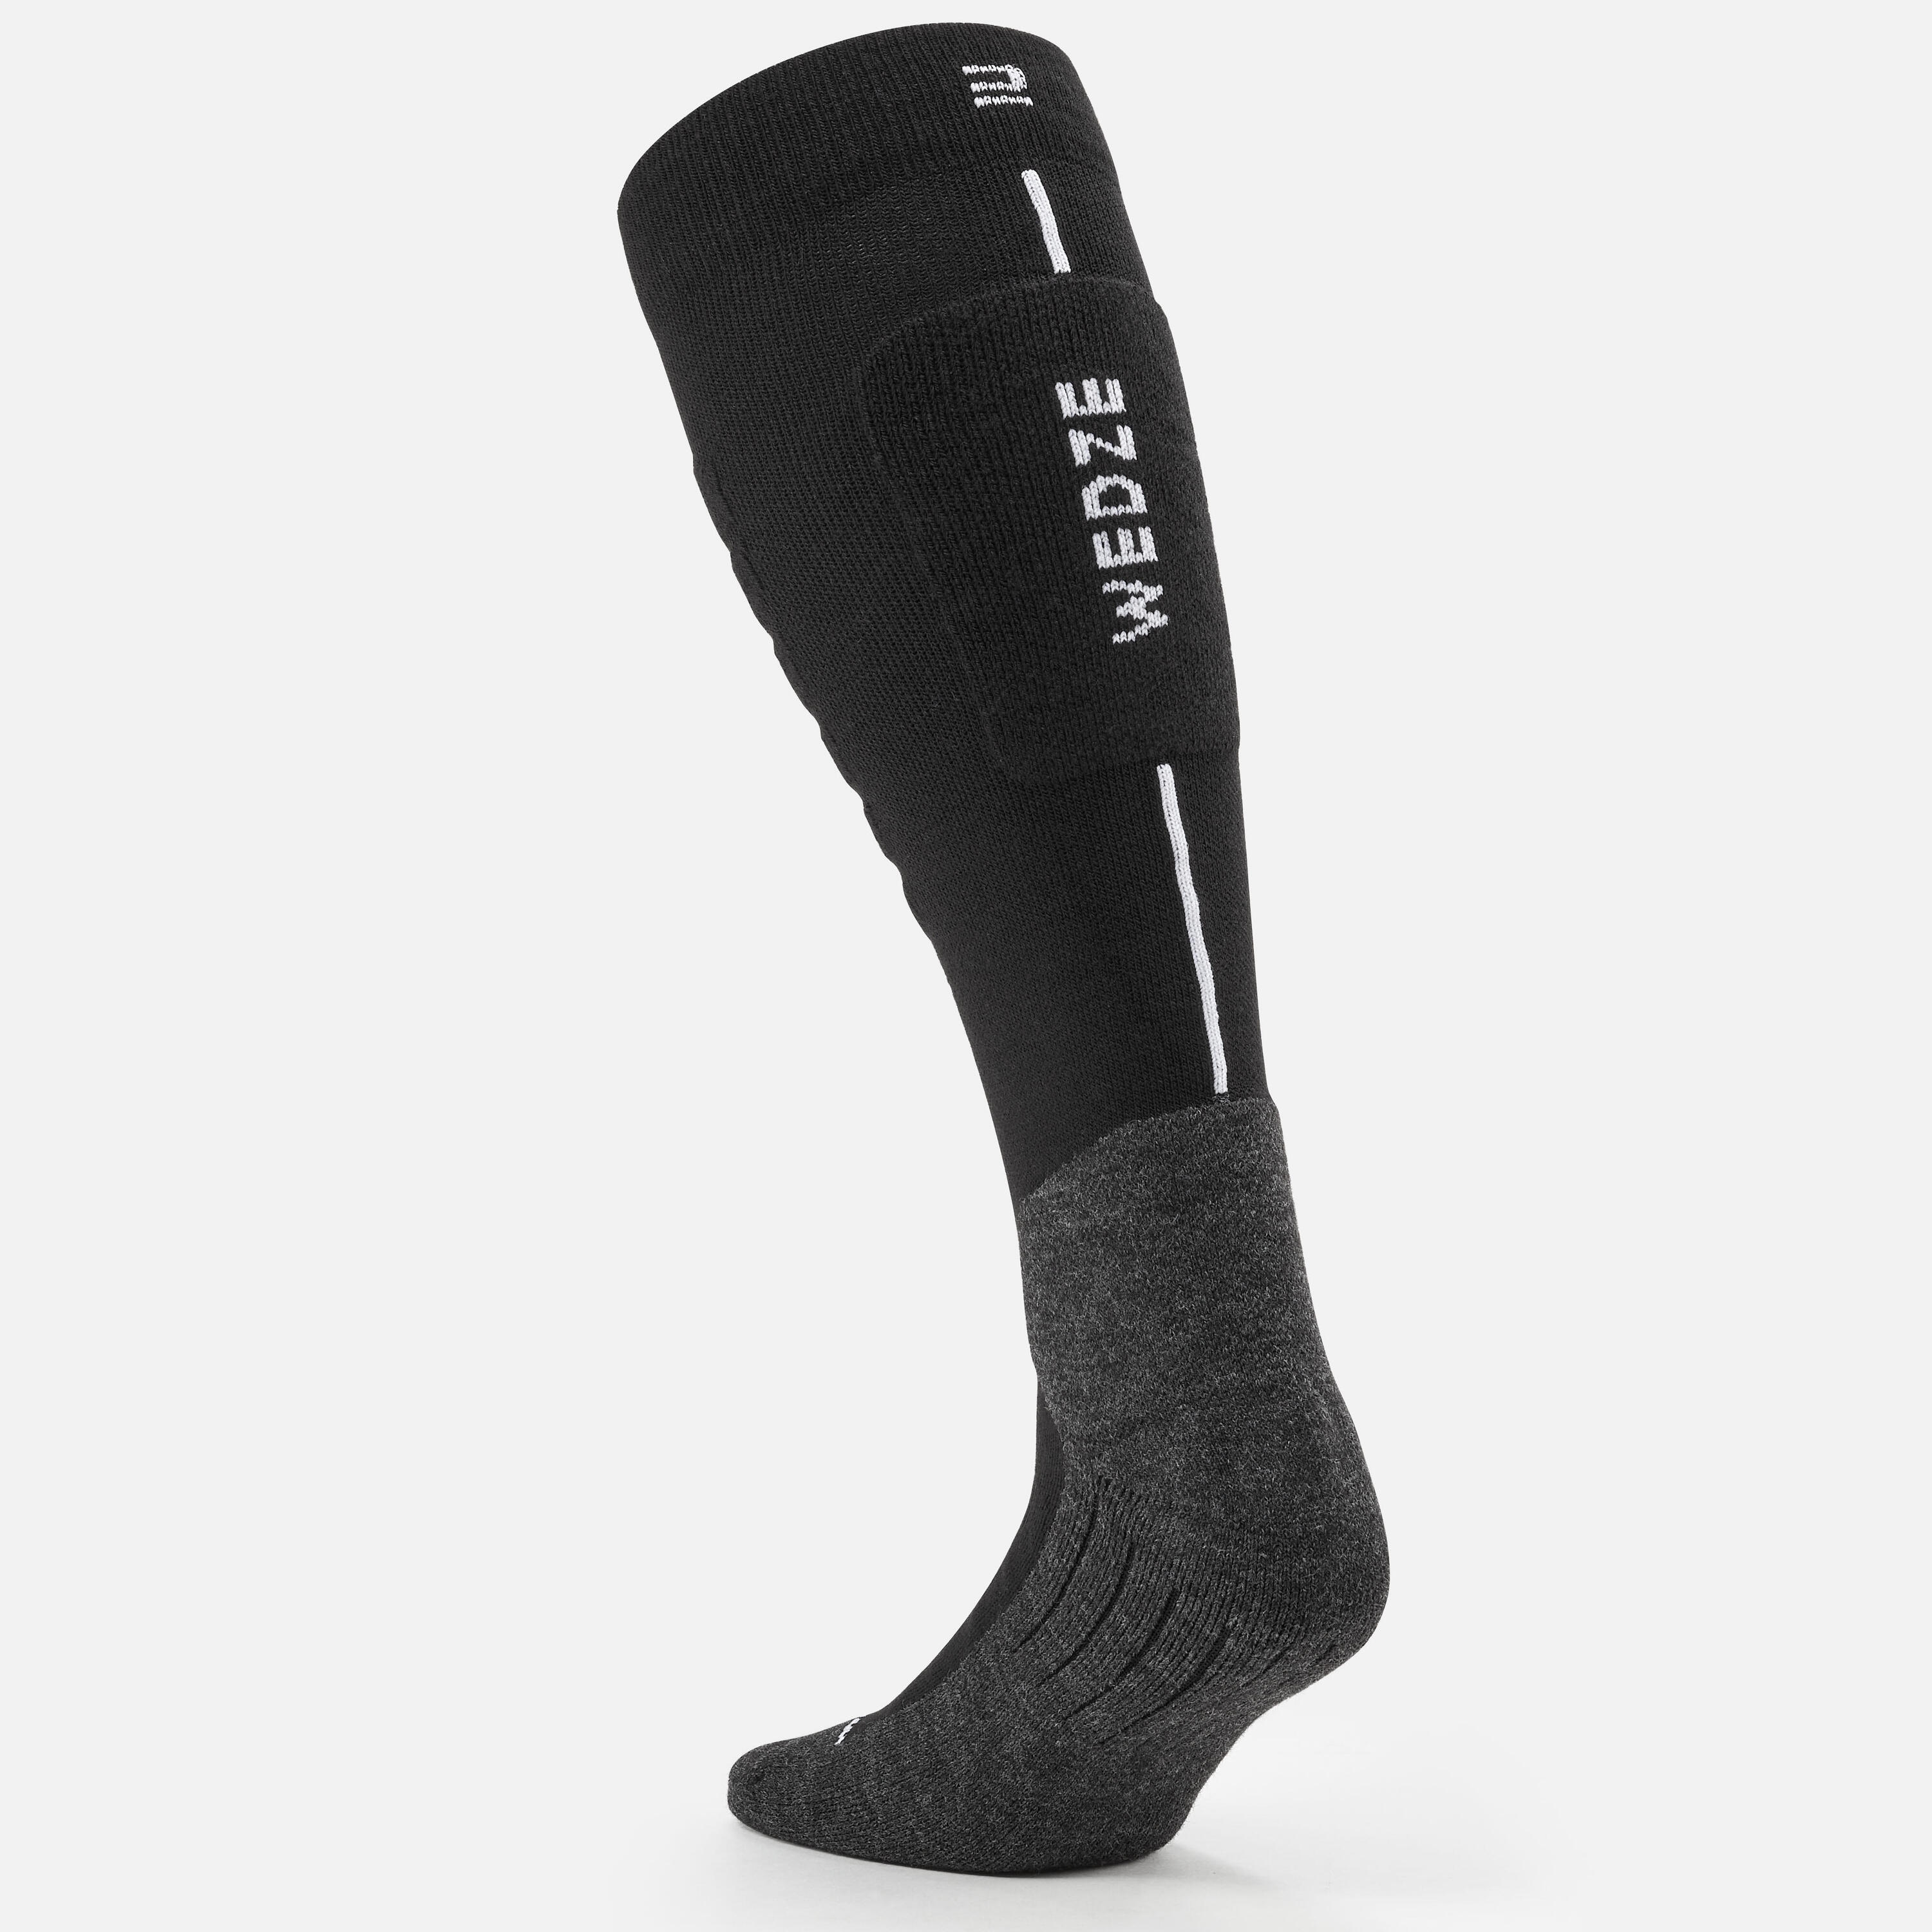 Adult ski and snowboard socks, 100 black and grey  4/9